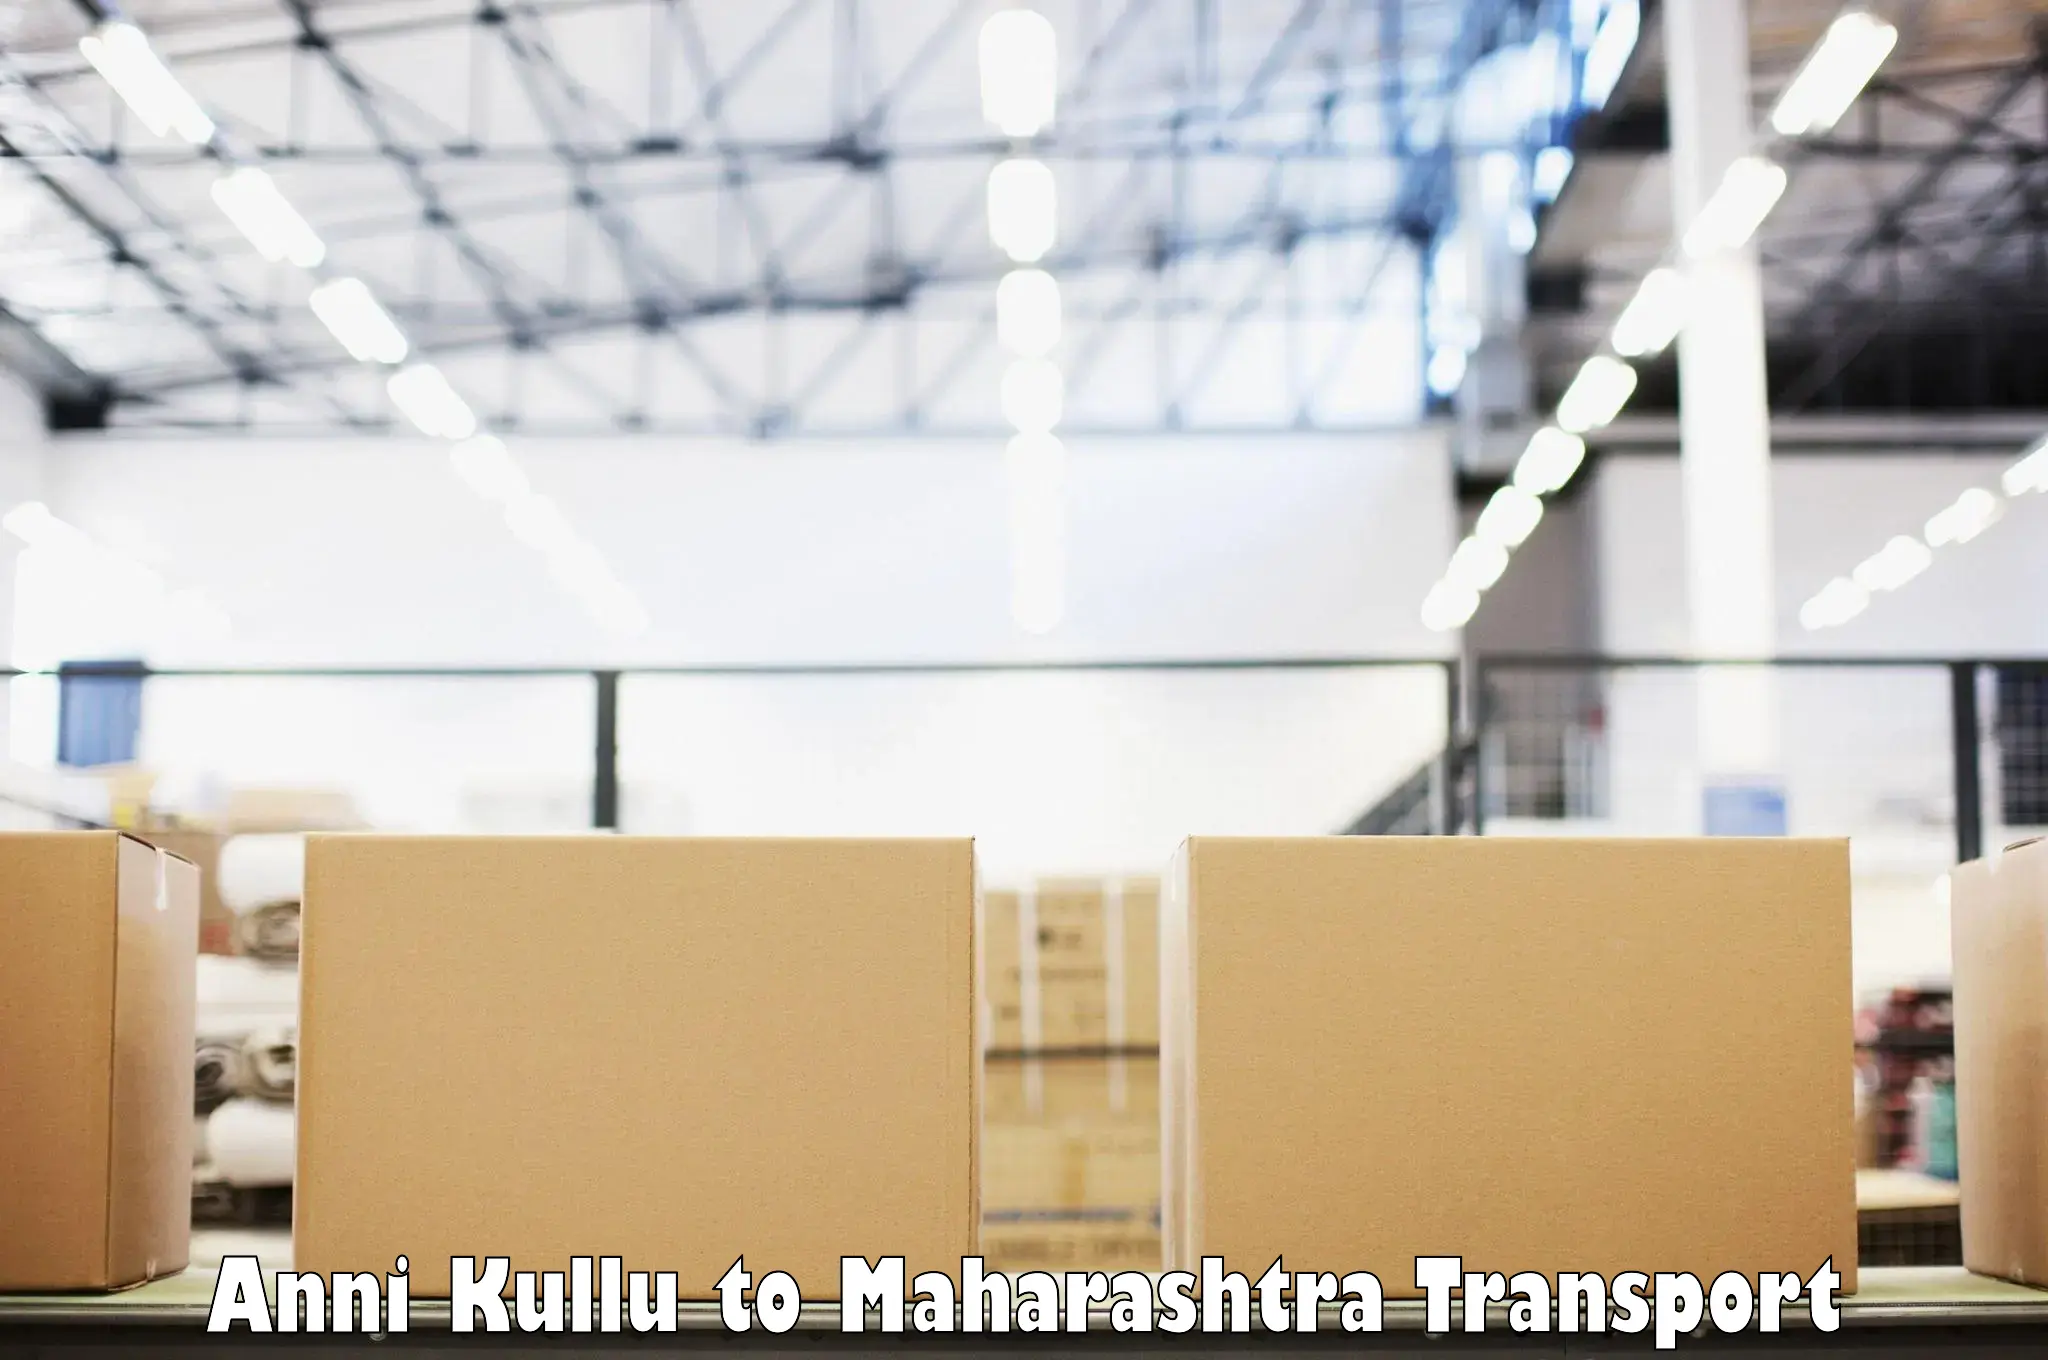 Container transport service Anni Kullu to Ambarnath